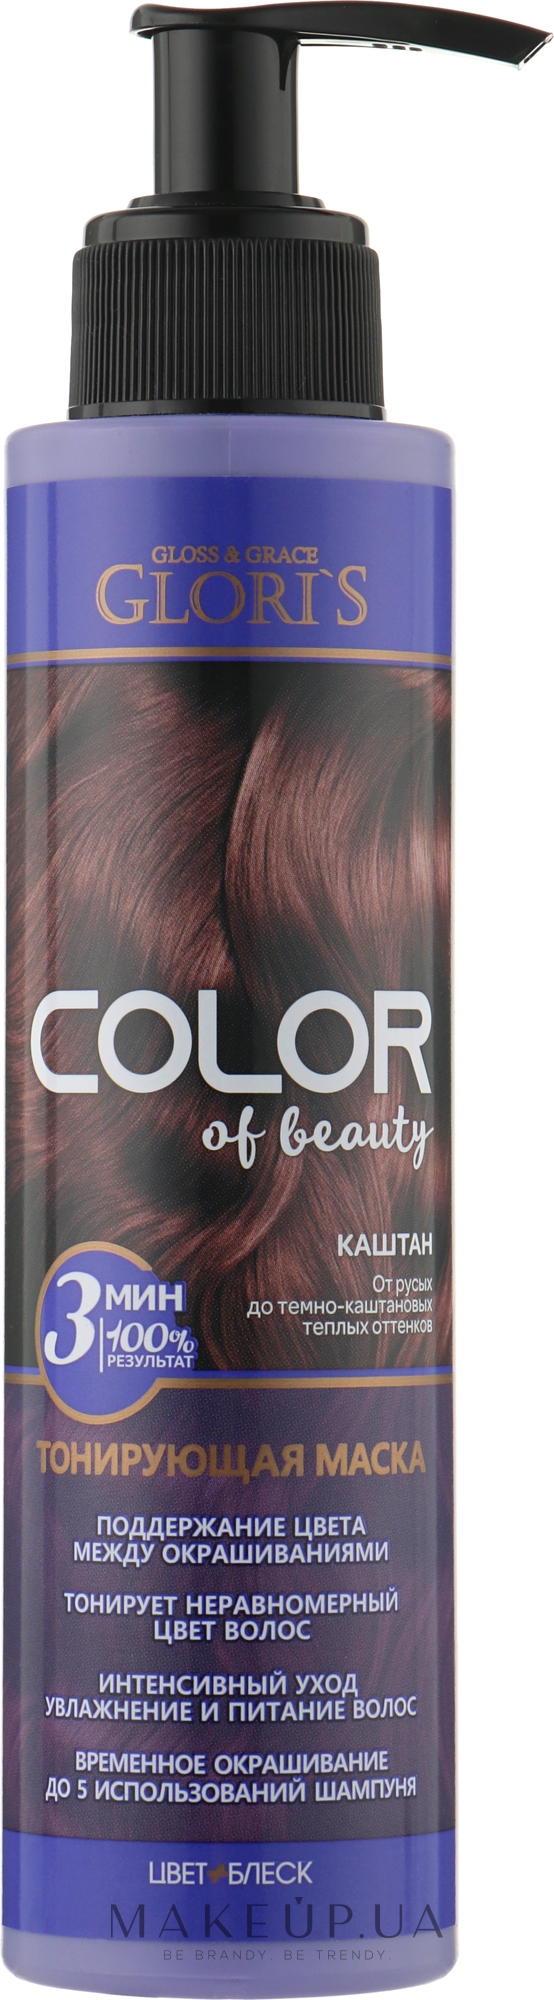 Тонувальна маска для волосся - Glori's Color Of Beauty Hair Mask — фото Каштан